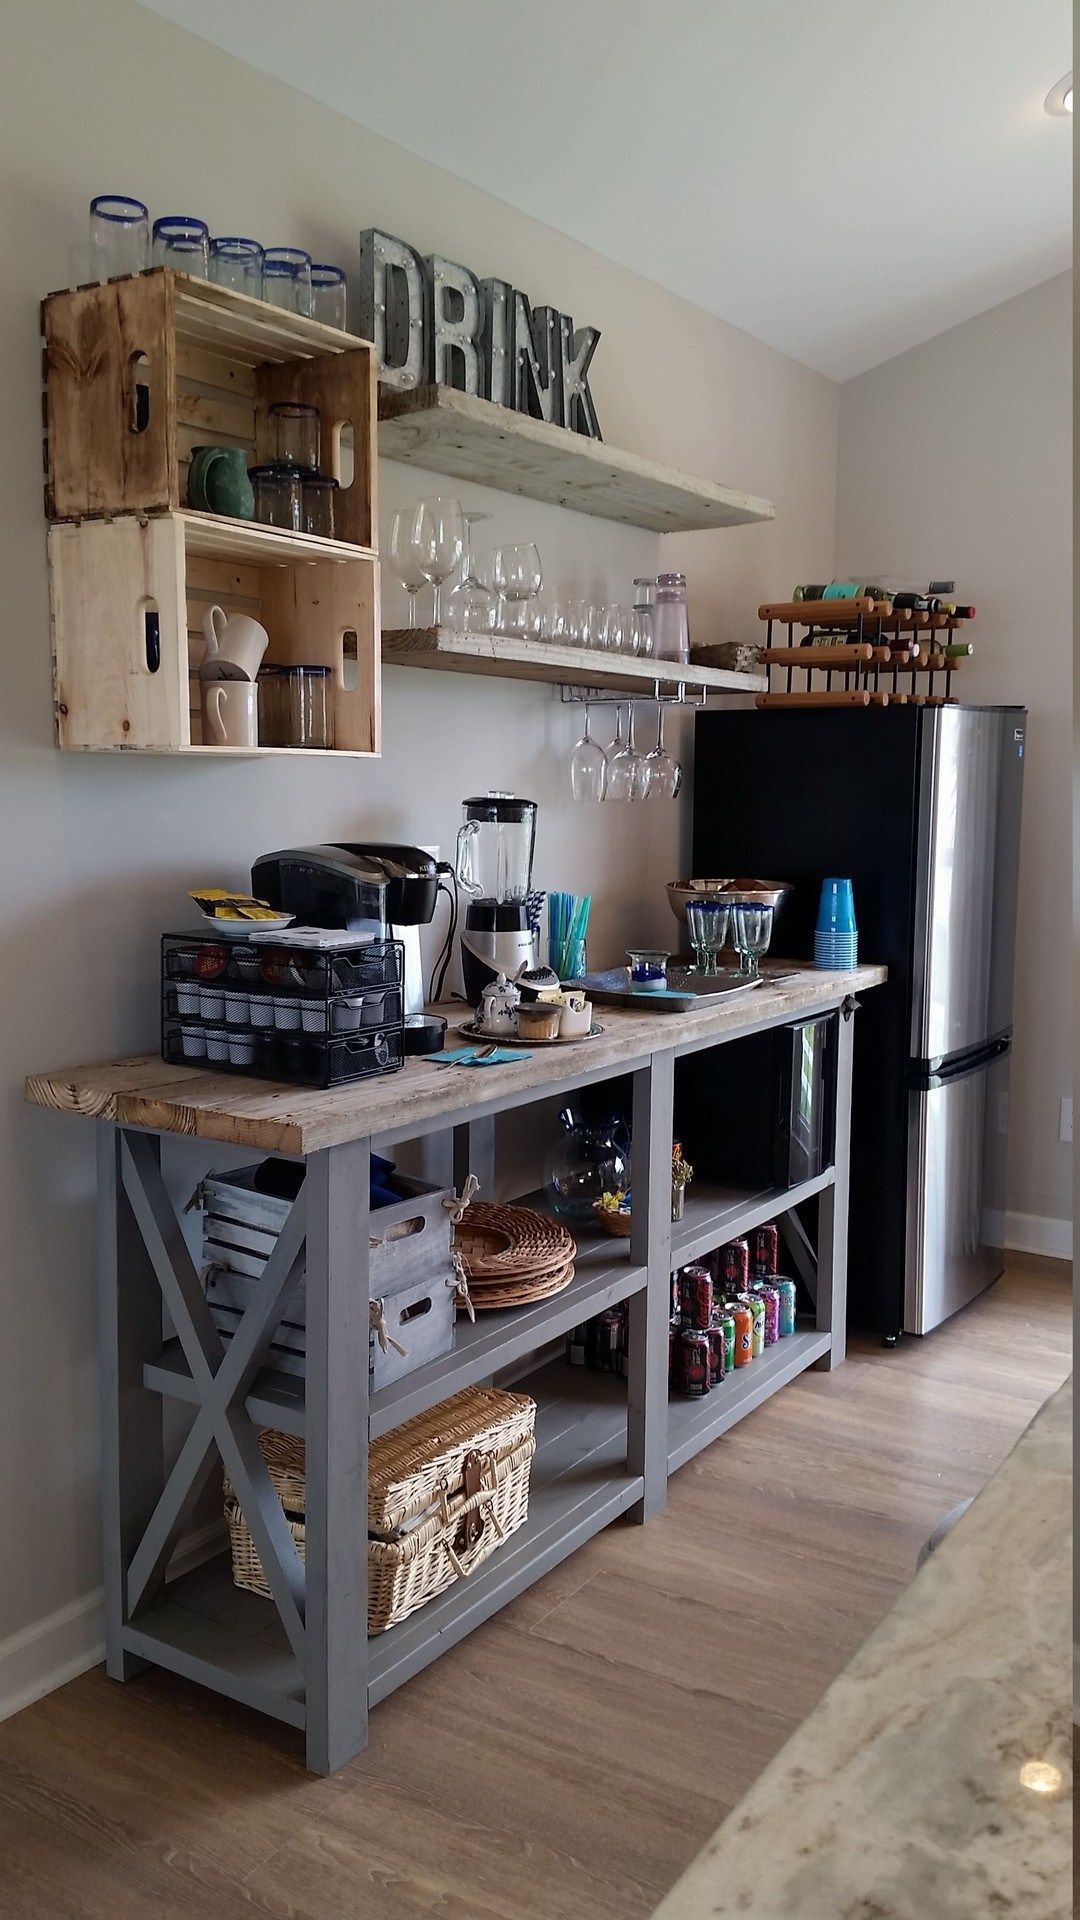 40 DIY Kitchen Ideas For Small Spaces (1) - 40 DIY Kitchen Ideas For Small Spaces (1) -   20 diy Kitchen wall ideas